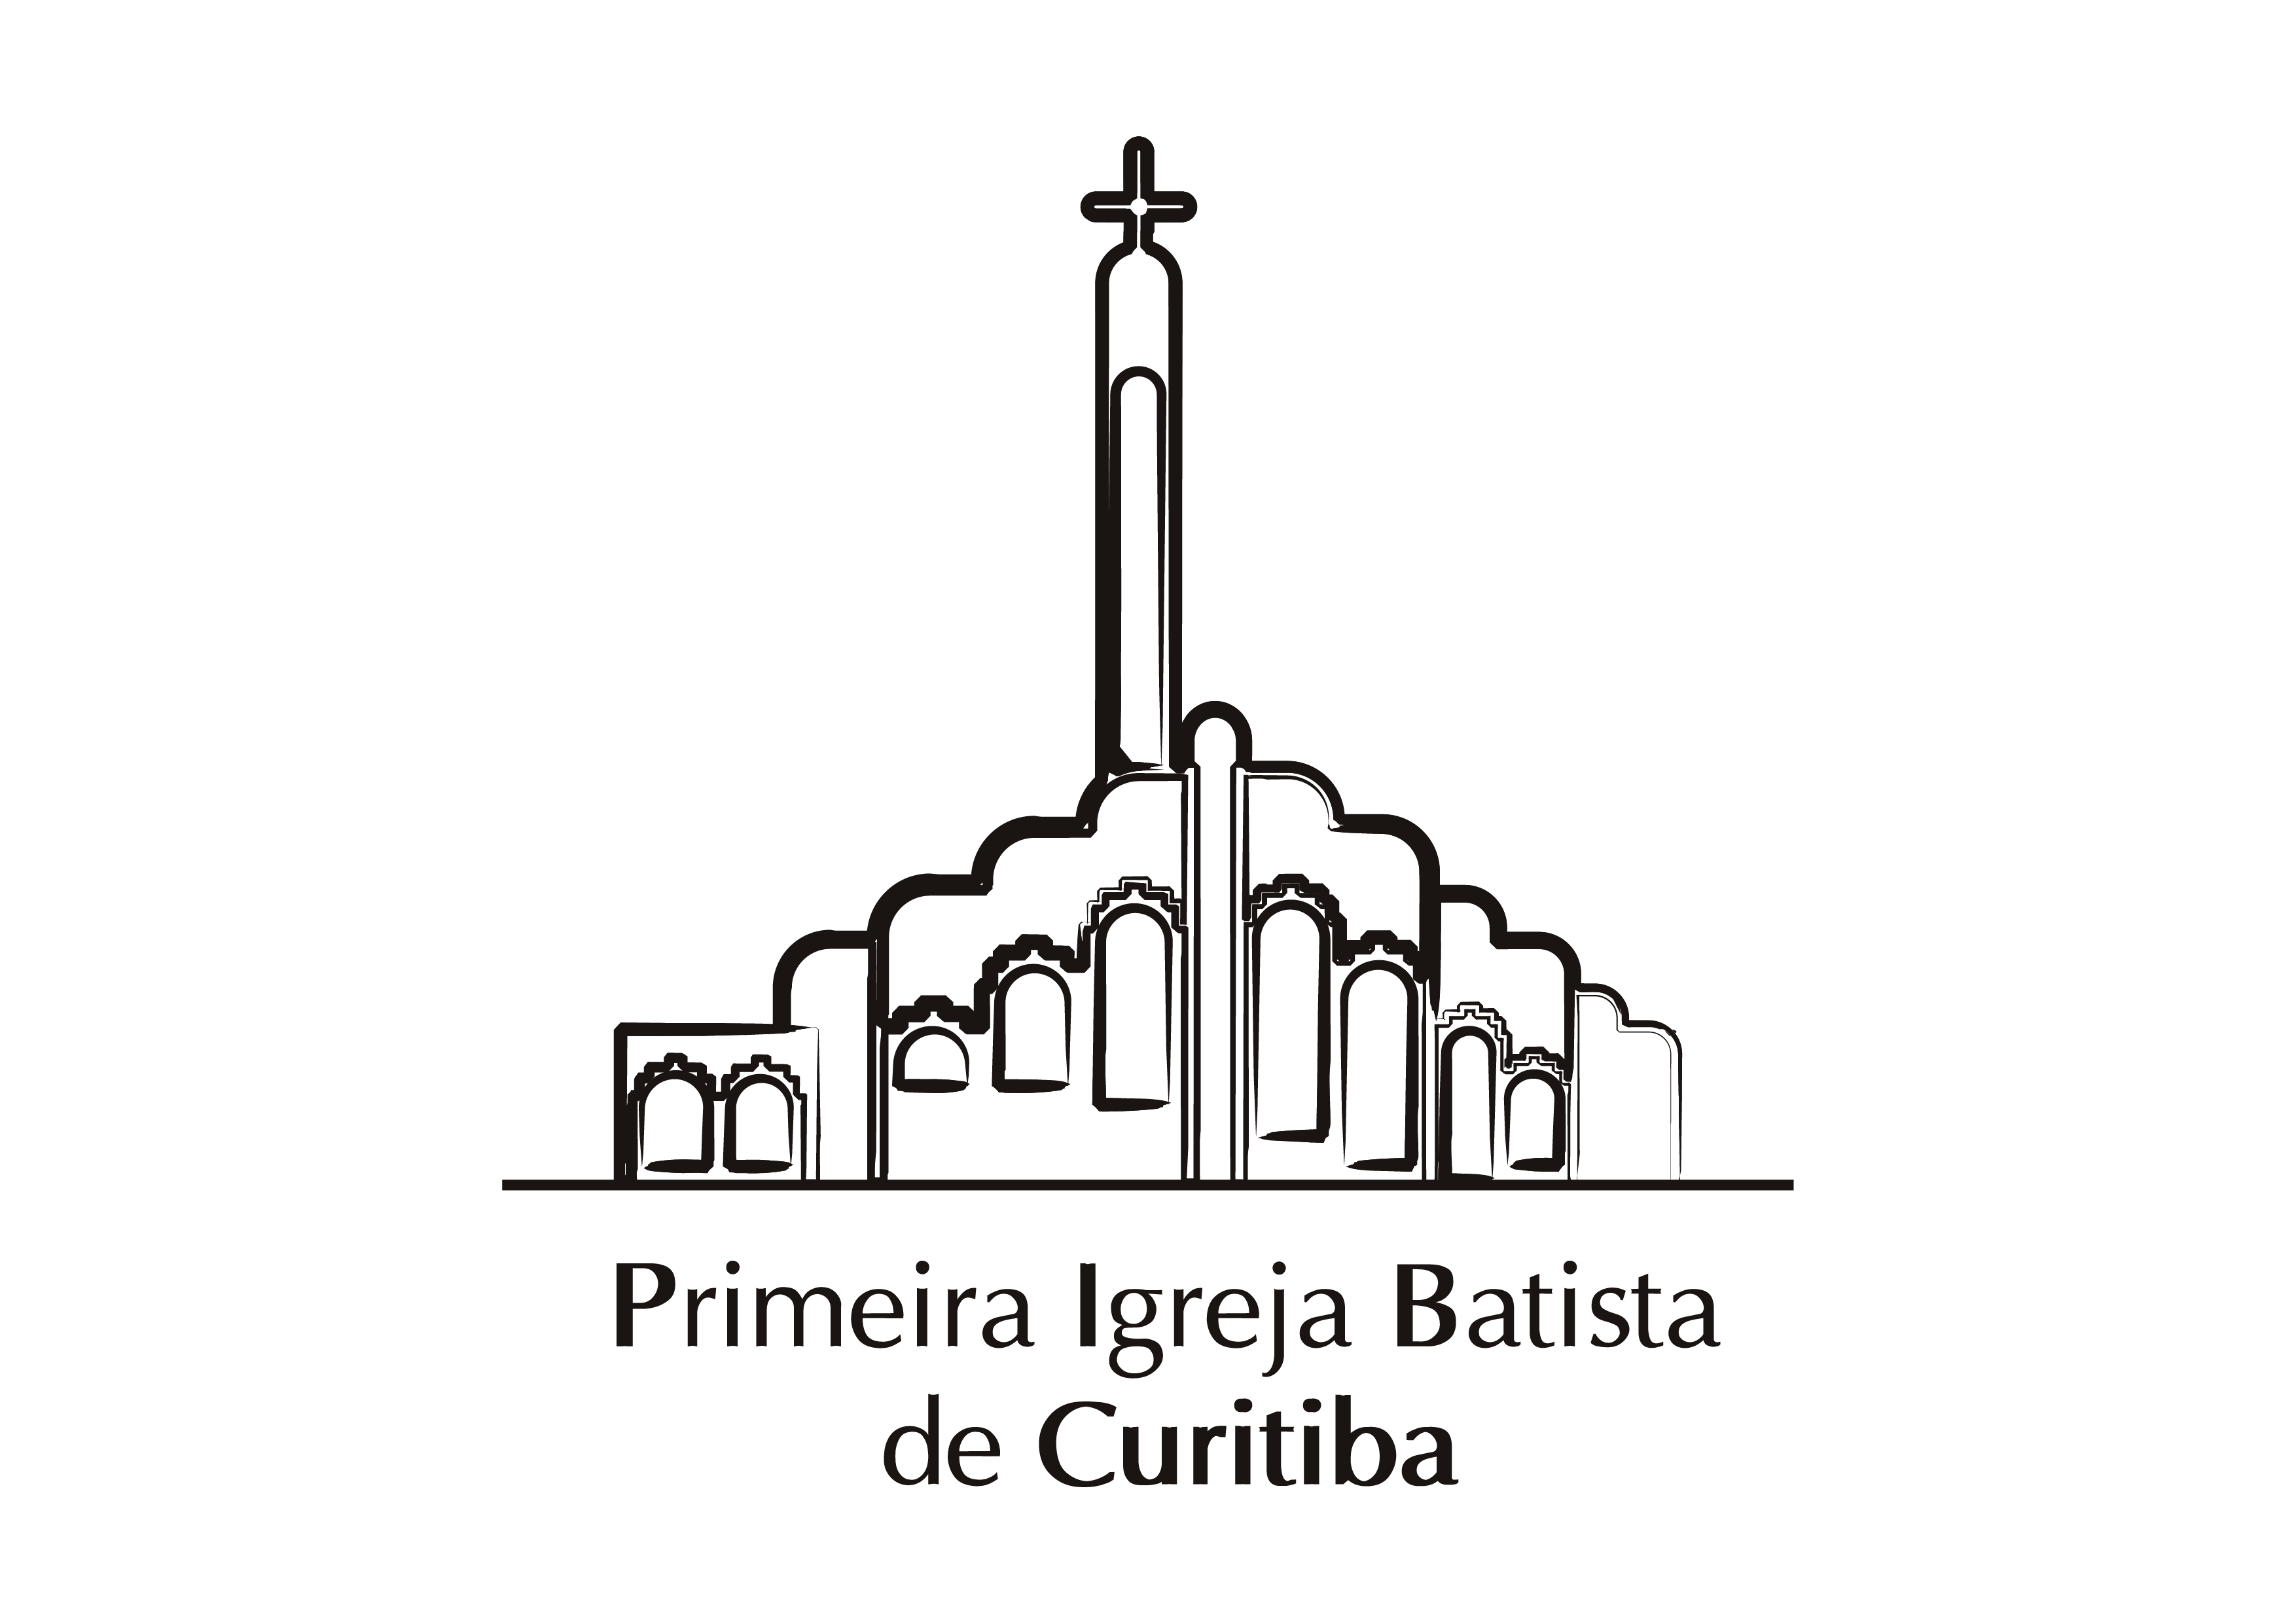 Revista PIB - 19/05/13 by Primeira Igreja Batista de Curitiba - Issuu